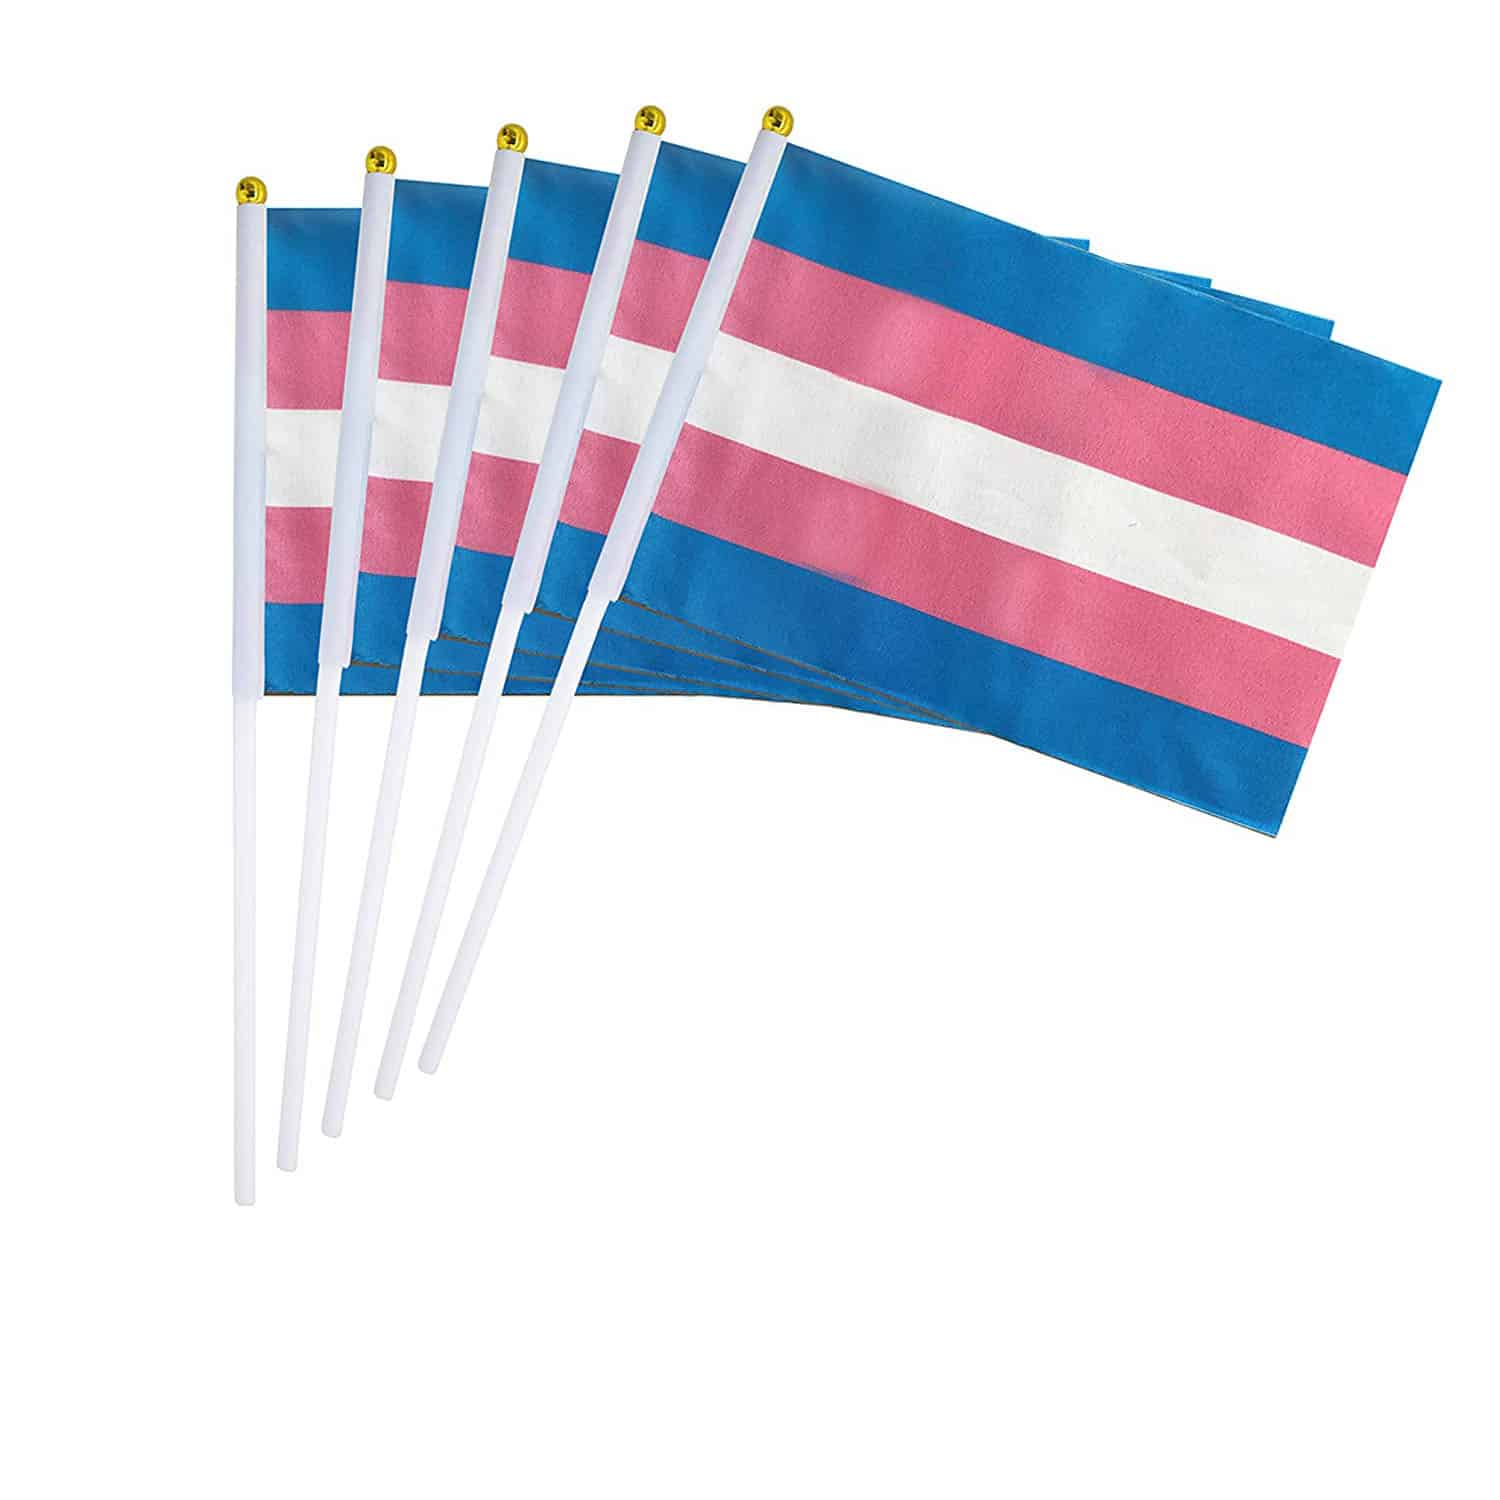 5 Transgender (Trans) Pride Hand Flags